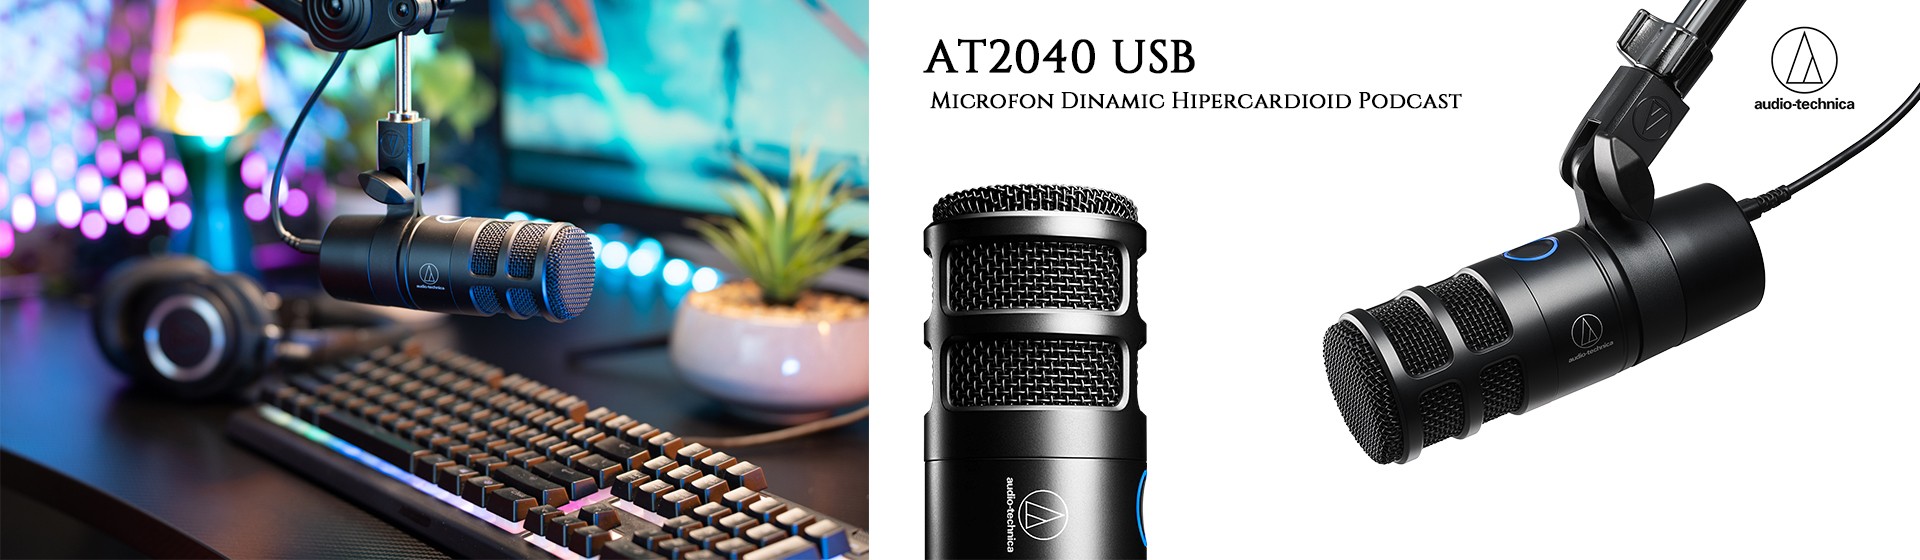  Microfon Dinamic Hipercardioid Podcast Audio Technica AT2040 USB